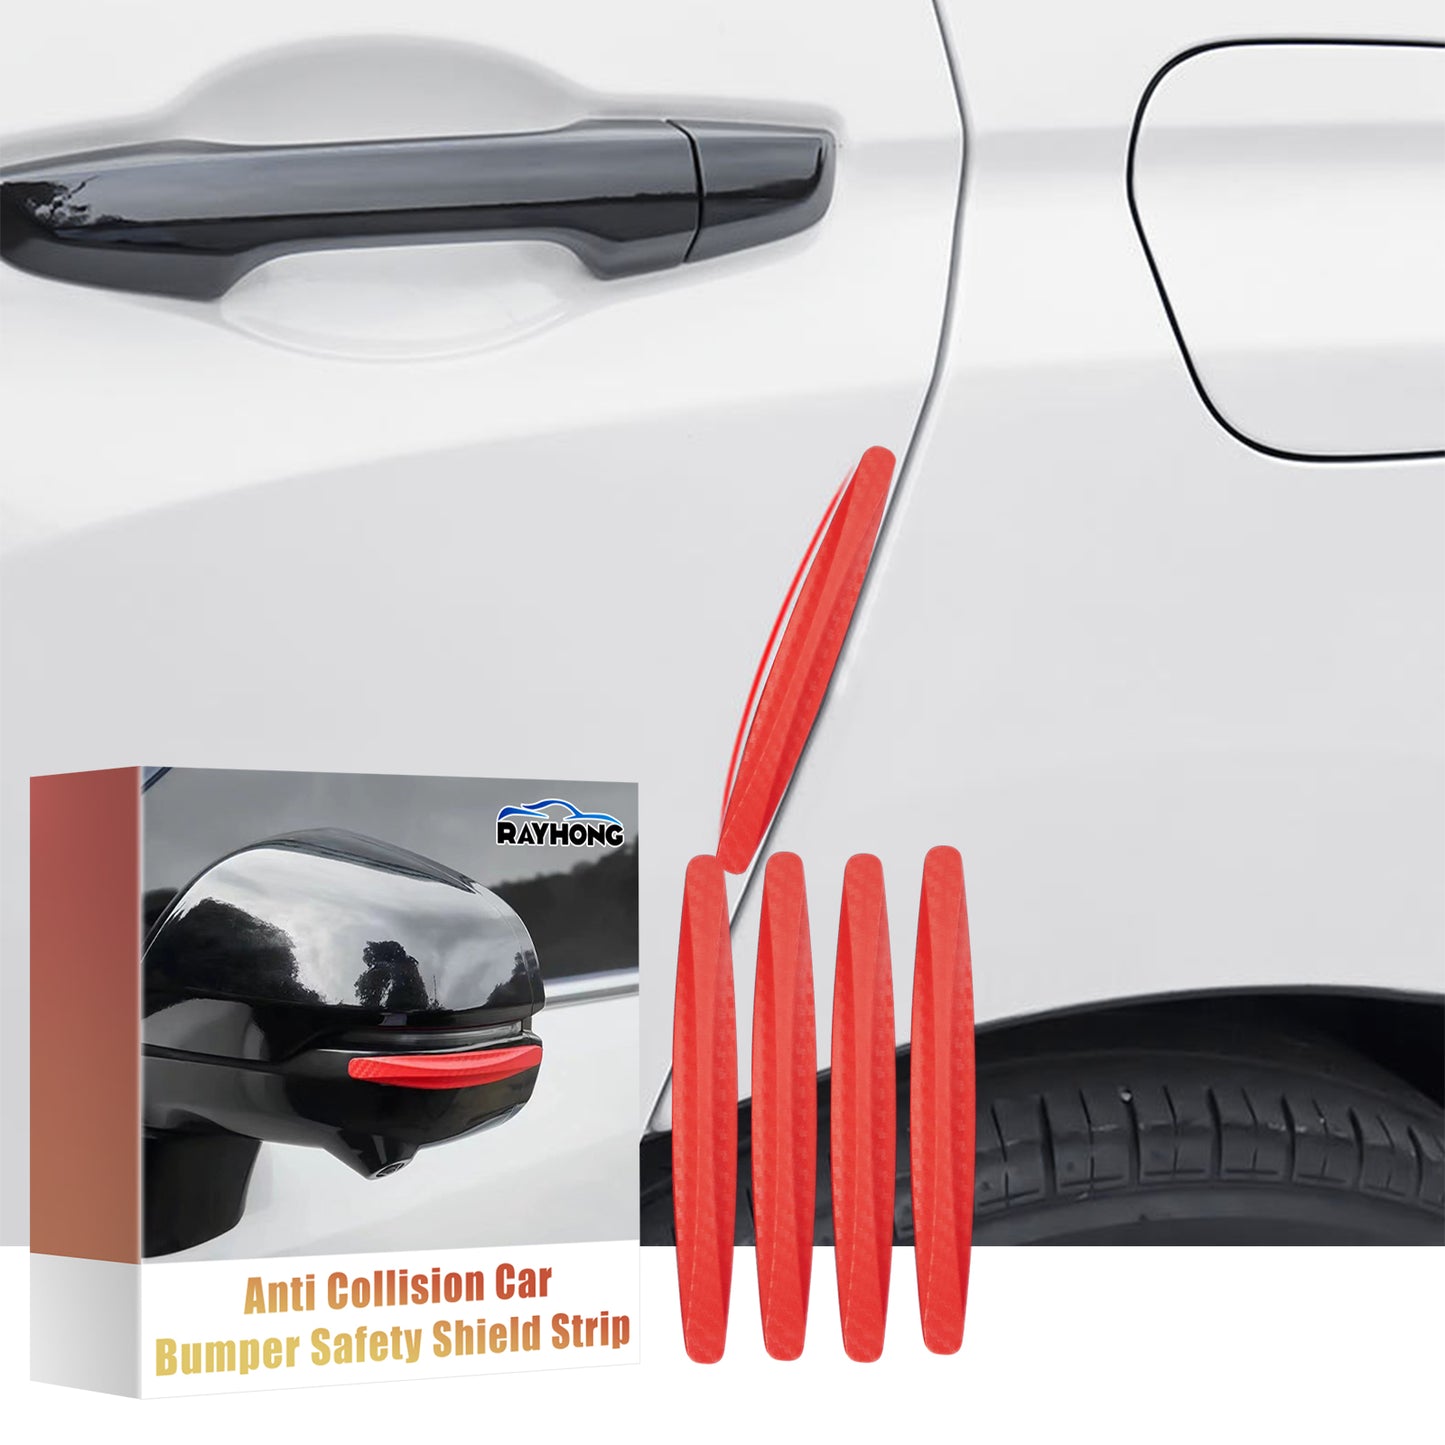 Anti Collision Car Bumper SafetyShield Strip